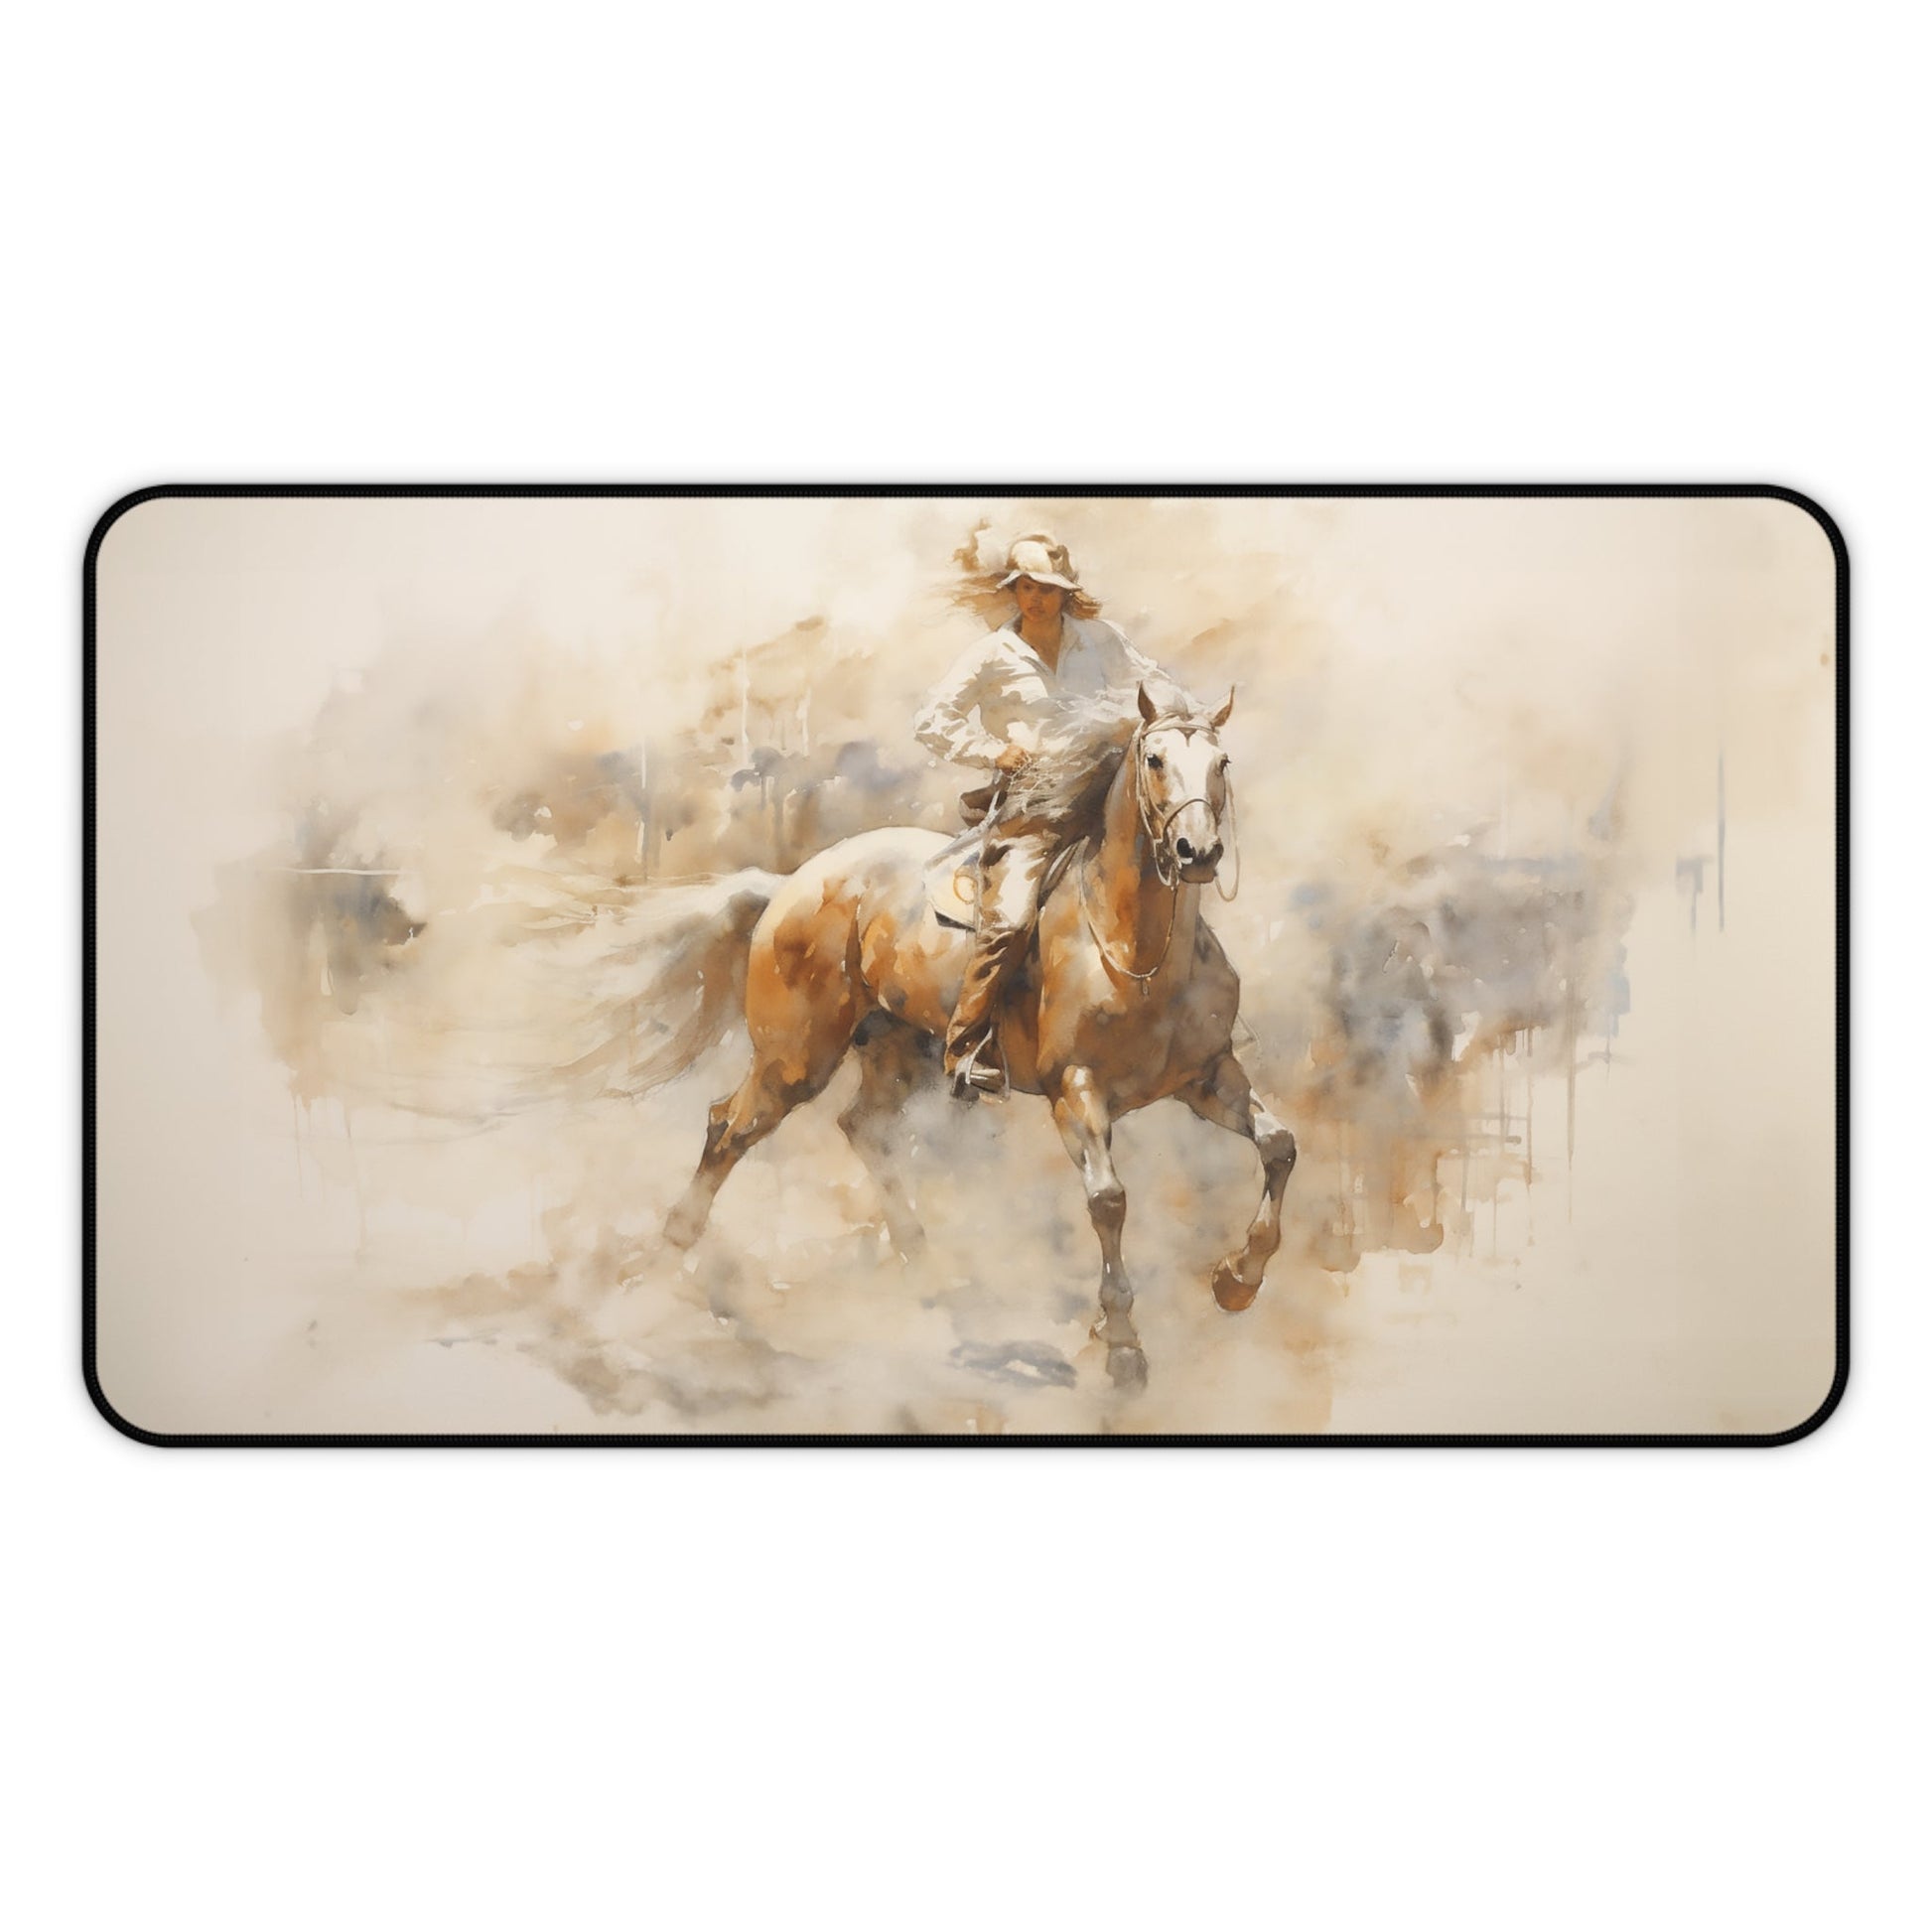 Horse MousePad / Desk Mat, Horse in Training, Beautiful Watercolor XL Desk Mat - Love of Horses, Gift for Horse Person, Horse Trainer Gift - FlooredByArt